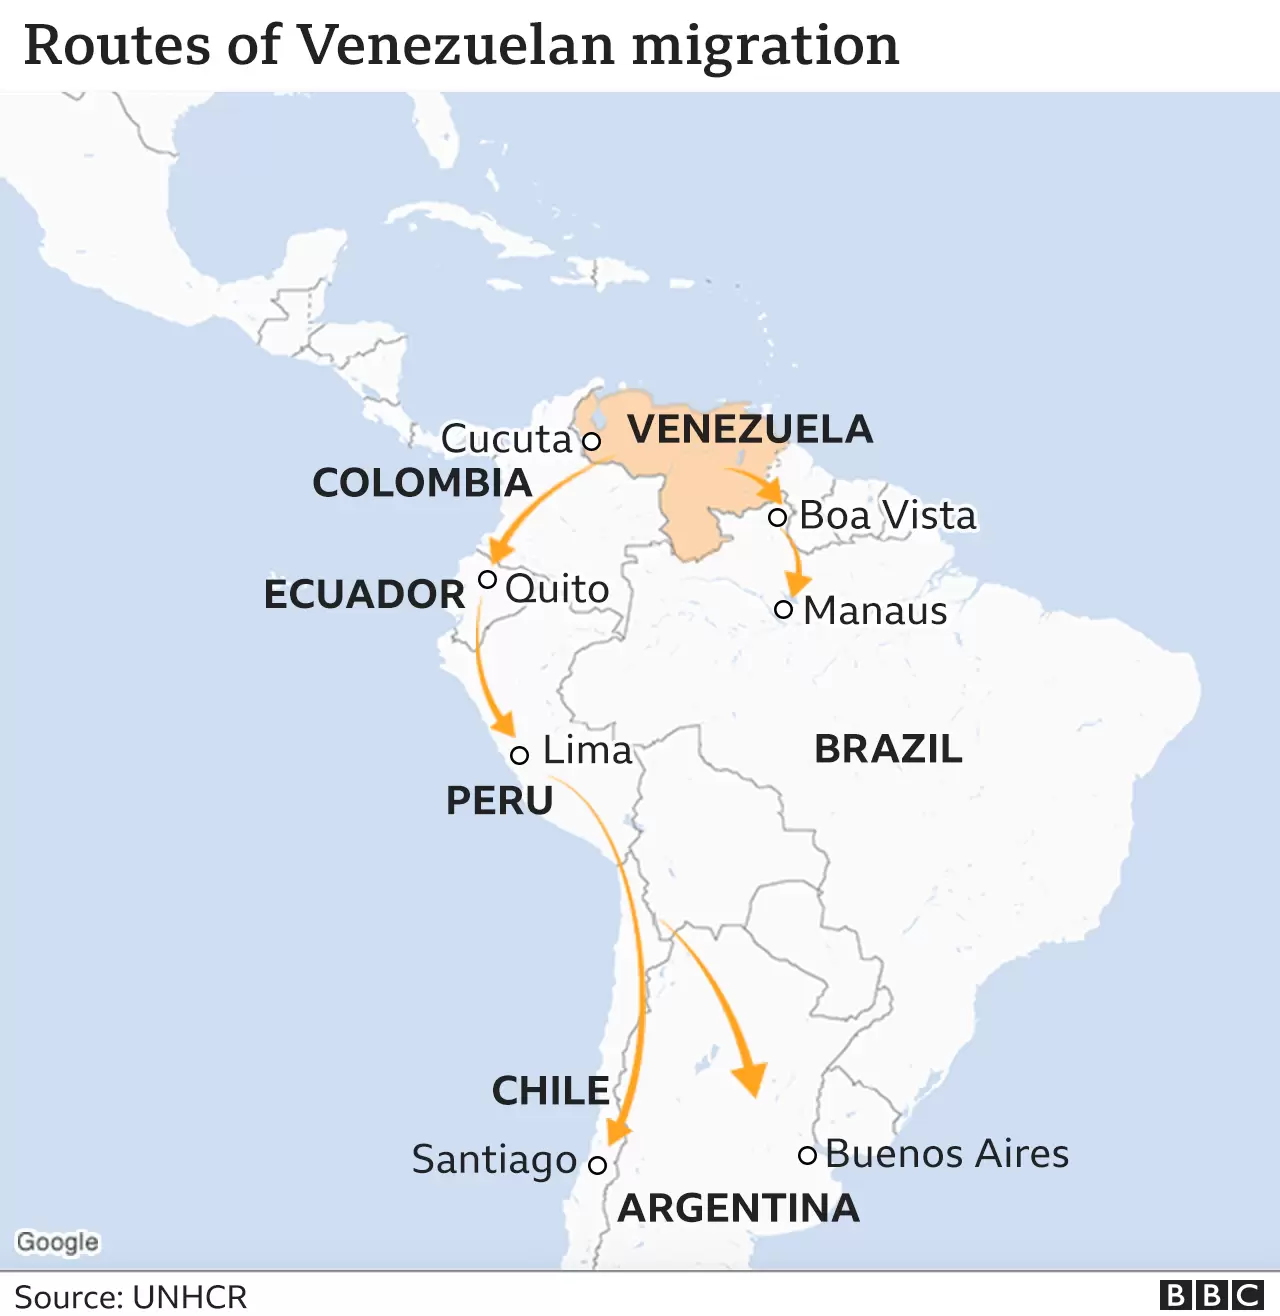 Venezuela crisis: 7.1m Venezuela migrants have fled the country since 2015 - Asiana Times